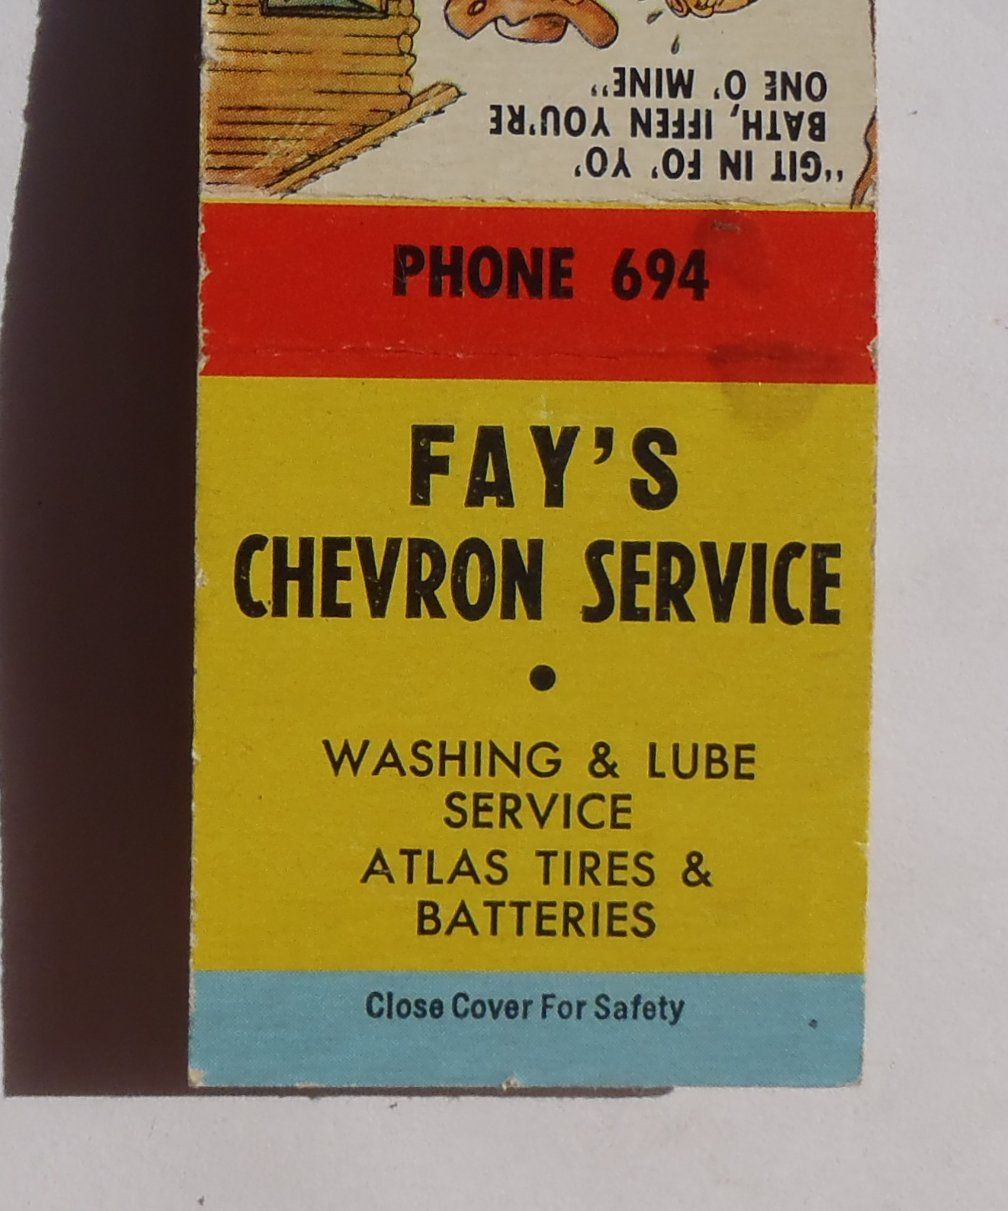  Fays Chevron Gas Service Phone 694 Atlas Tires Heber City UT